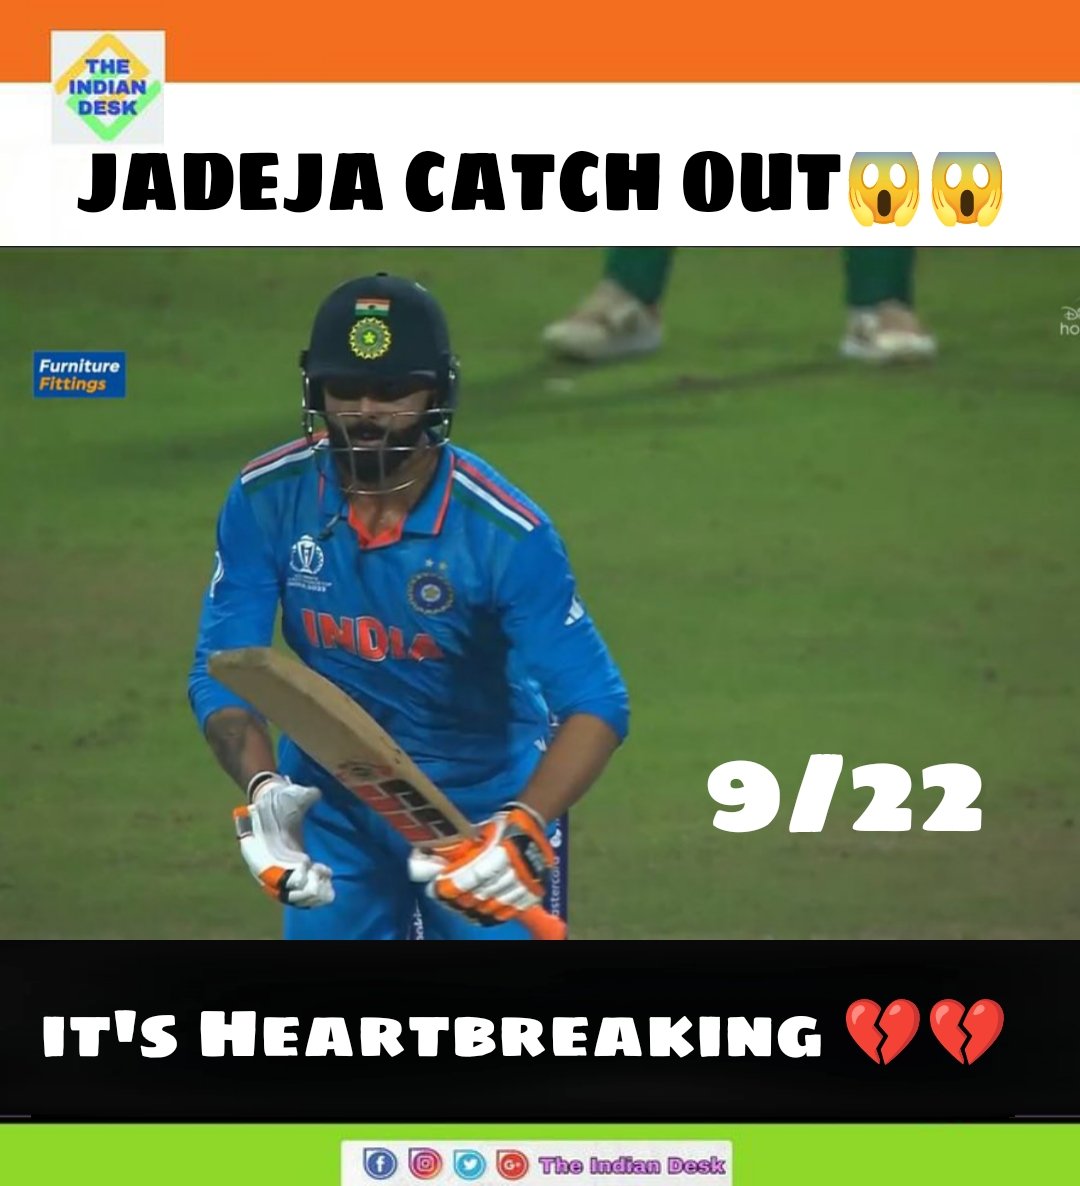 #INDvsAUSfinal #WorldcupFinal #jadeja #TeamIndiainFinal #wicket #IndiaVsAustralia